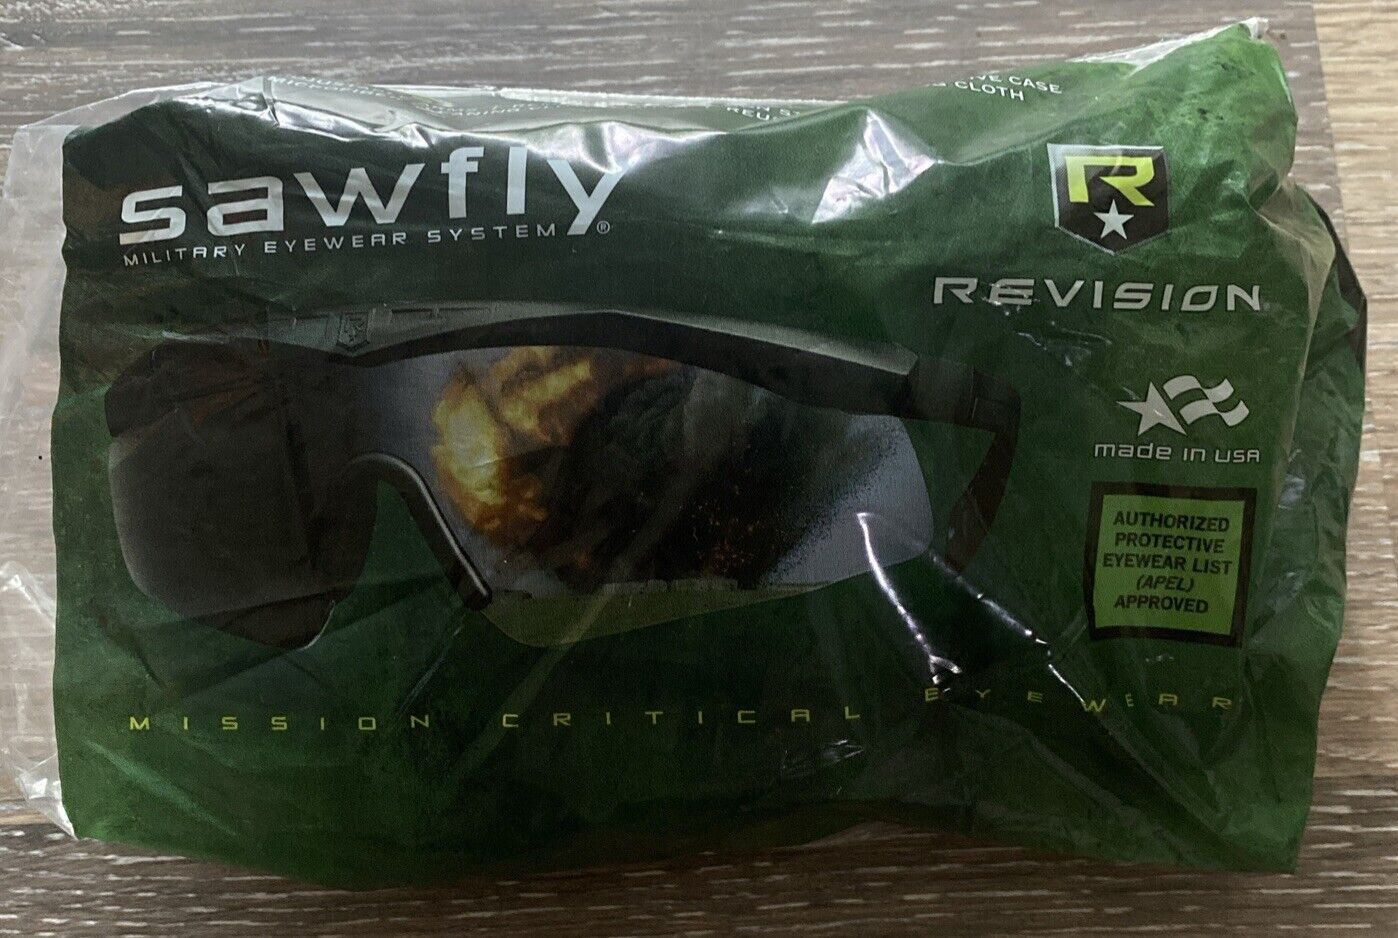 Revision Sawfly Military Eyewear System Mission Critical Eyewear Kit